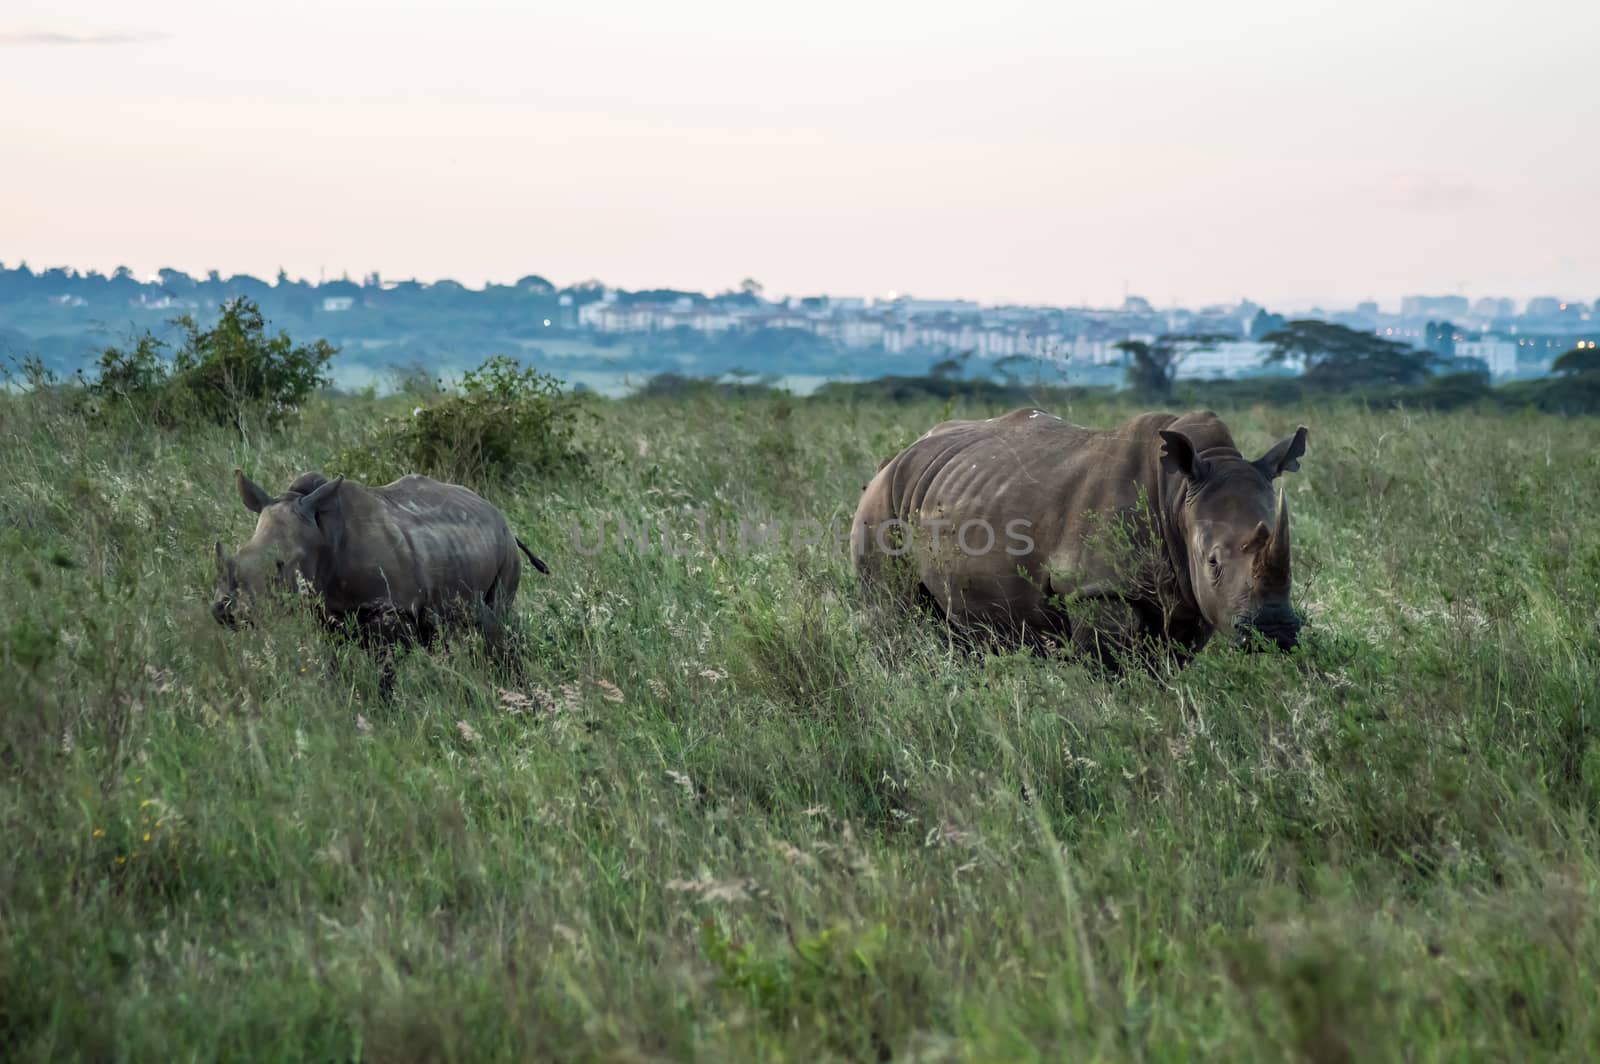 A rhinoceros and his cub in the savannah of Nairobi park in central Kenya